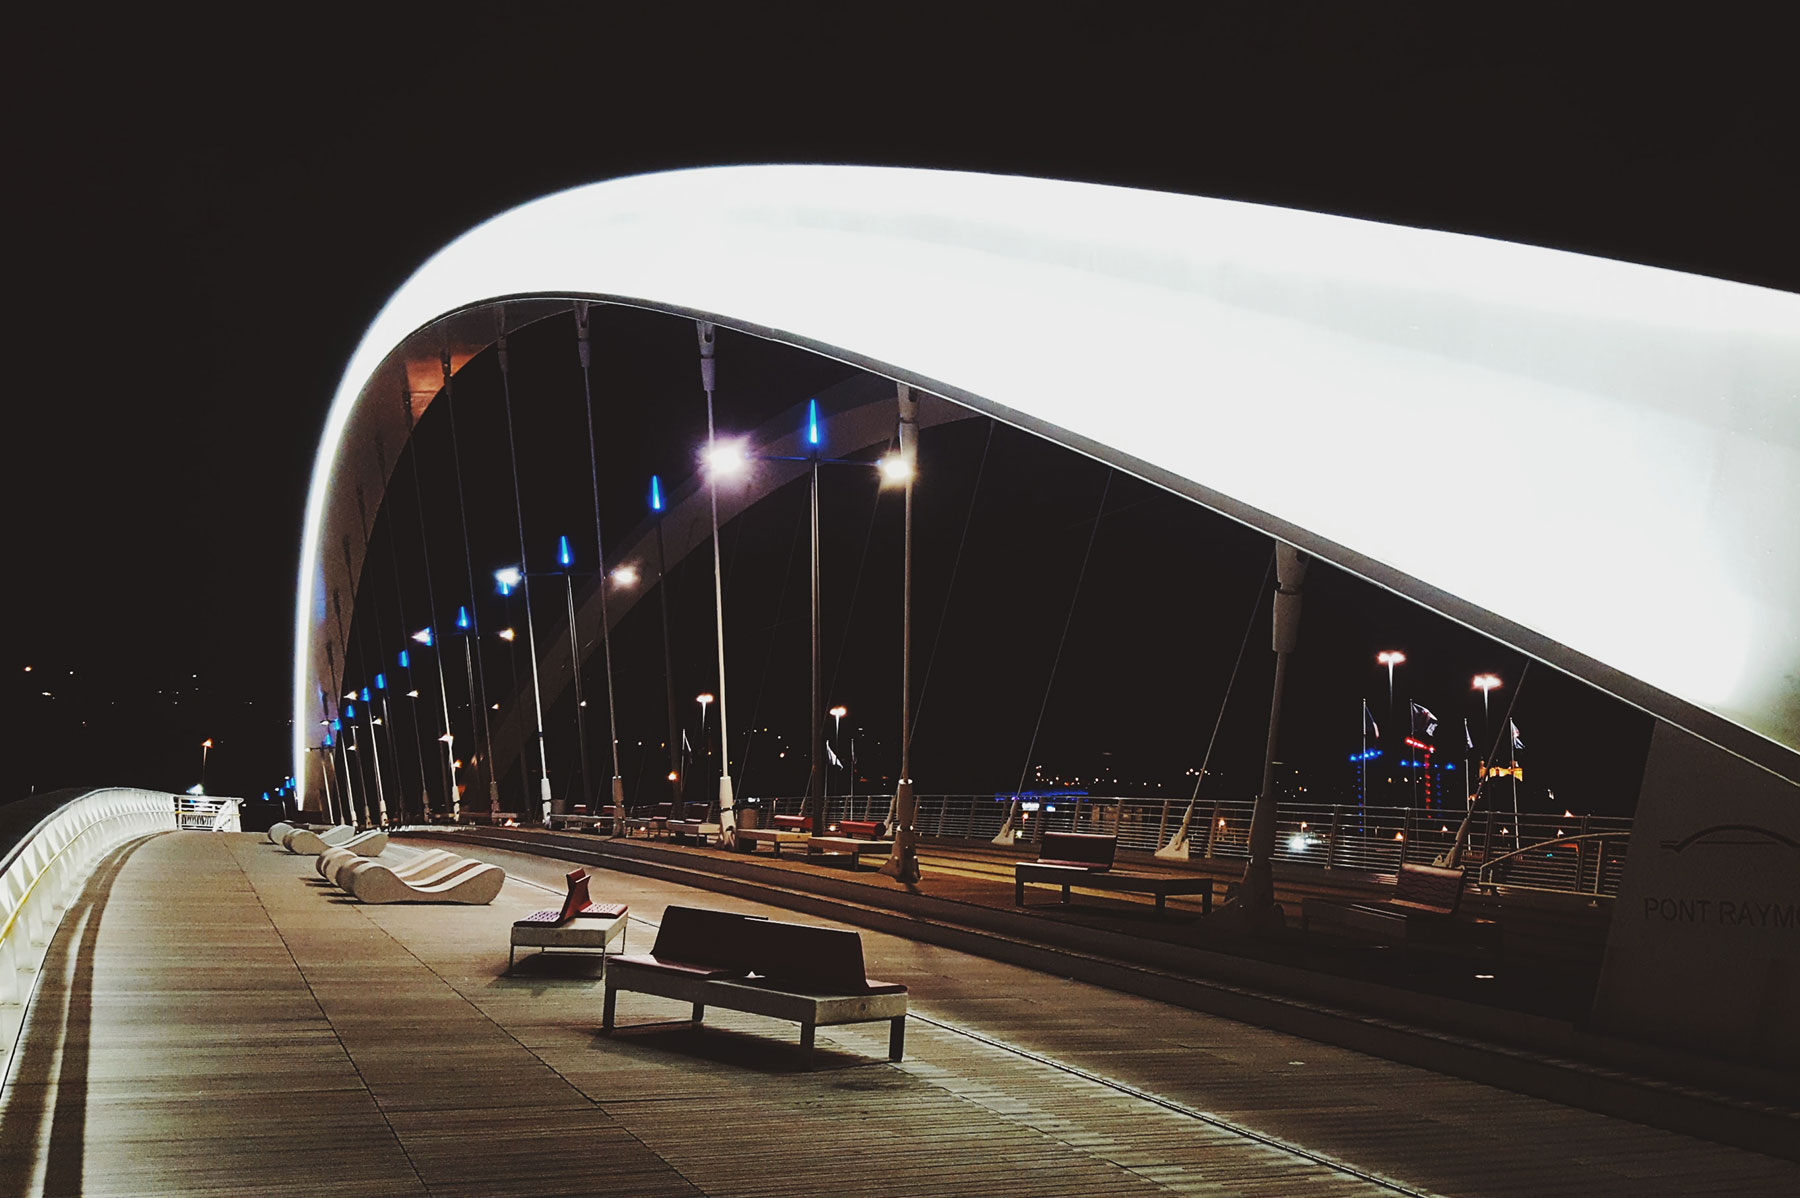 Suspension bridge at night over a platform